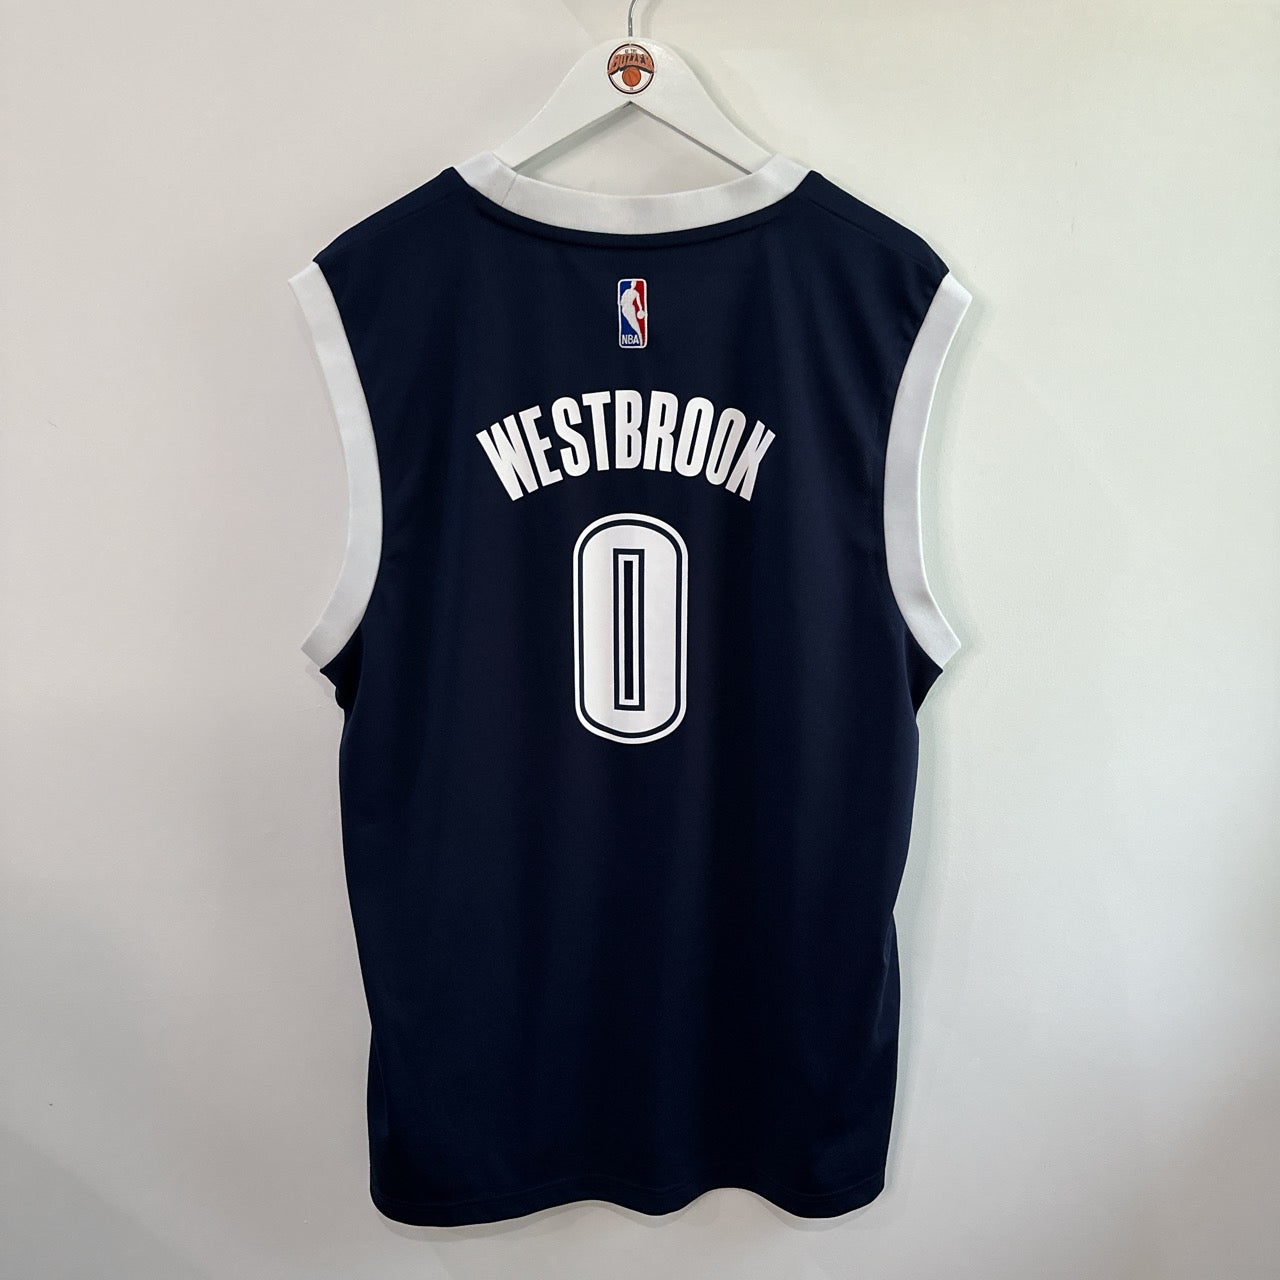 Oklahoma City Thunder Russell Westbrook Adidas jersey - Large